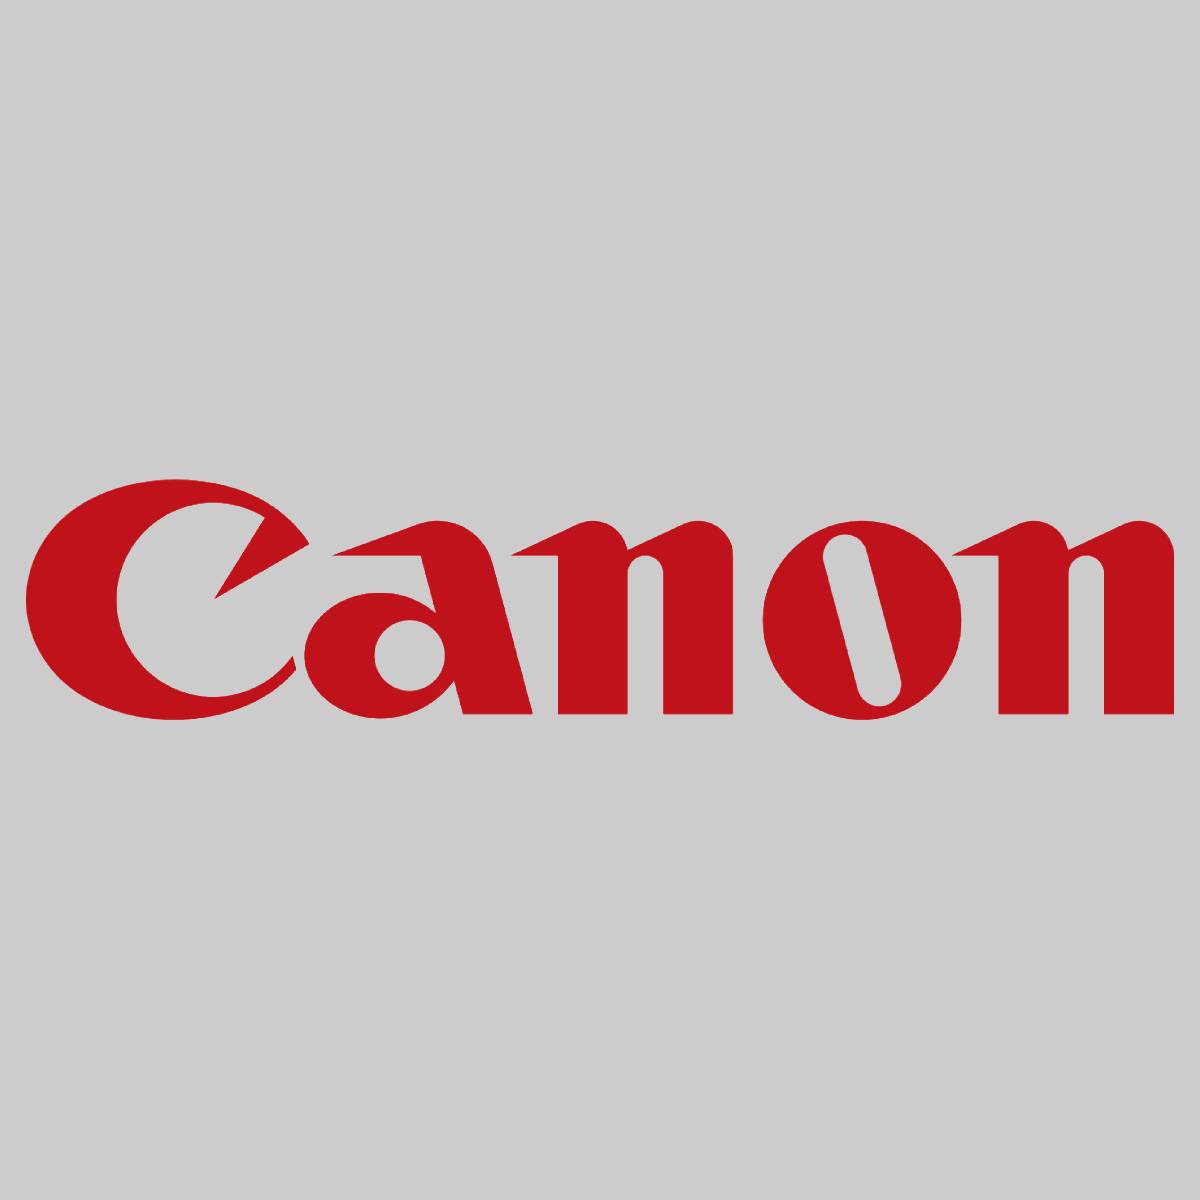 "Original Canon D3 STAPLE CARTRIDGE 0250A013 iR5800 iR5870 iR5870 iR5880 iR6800^